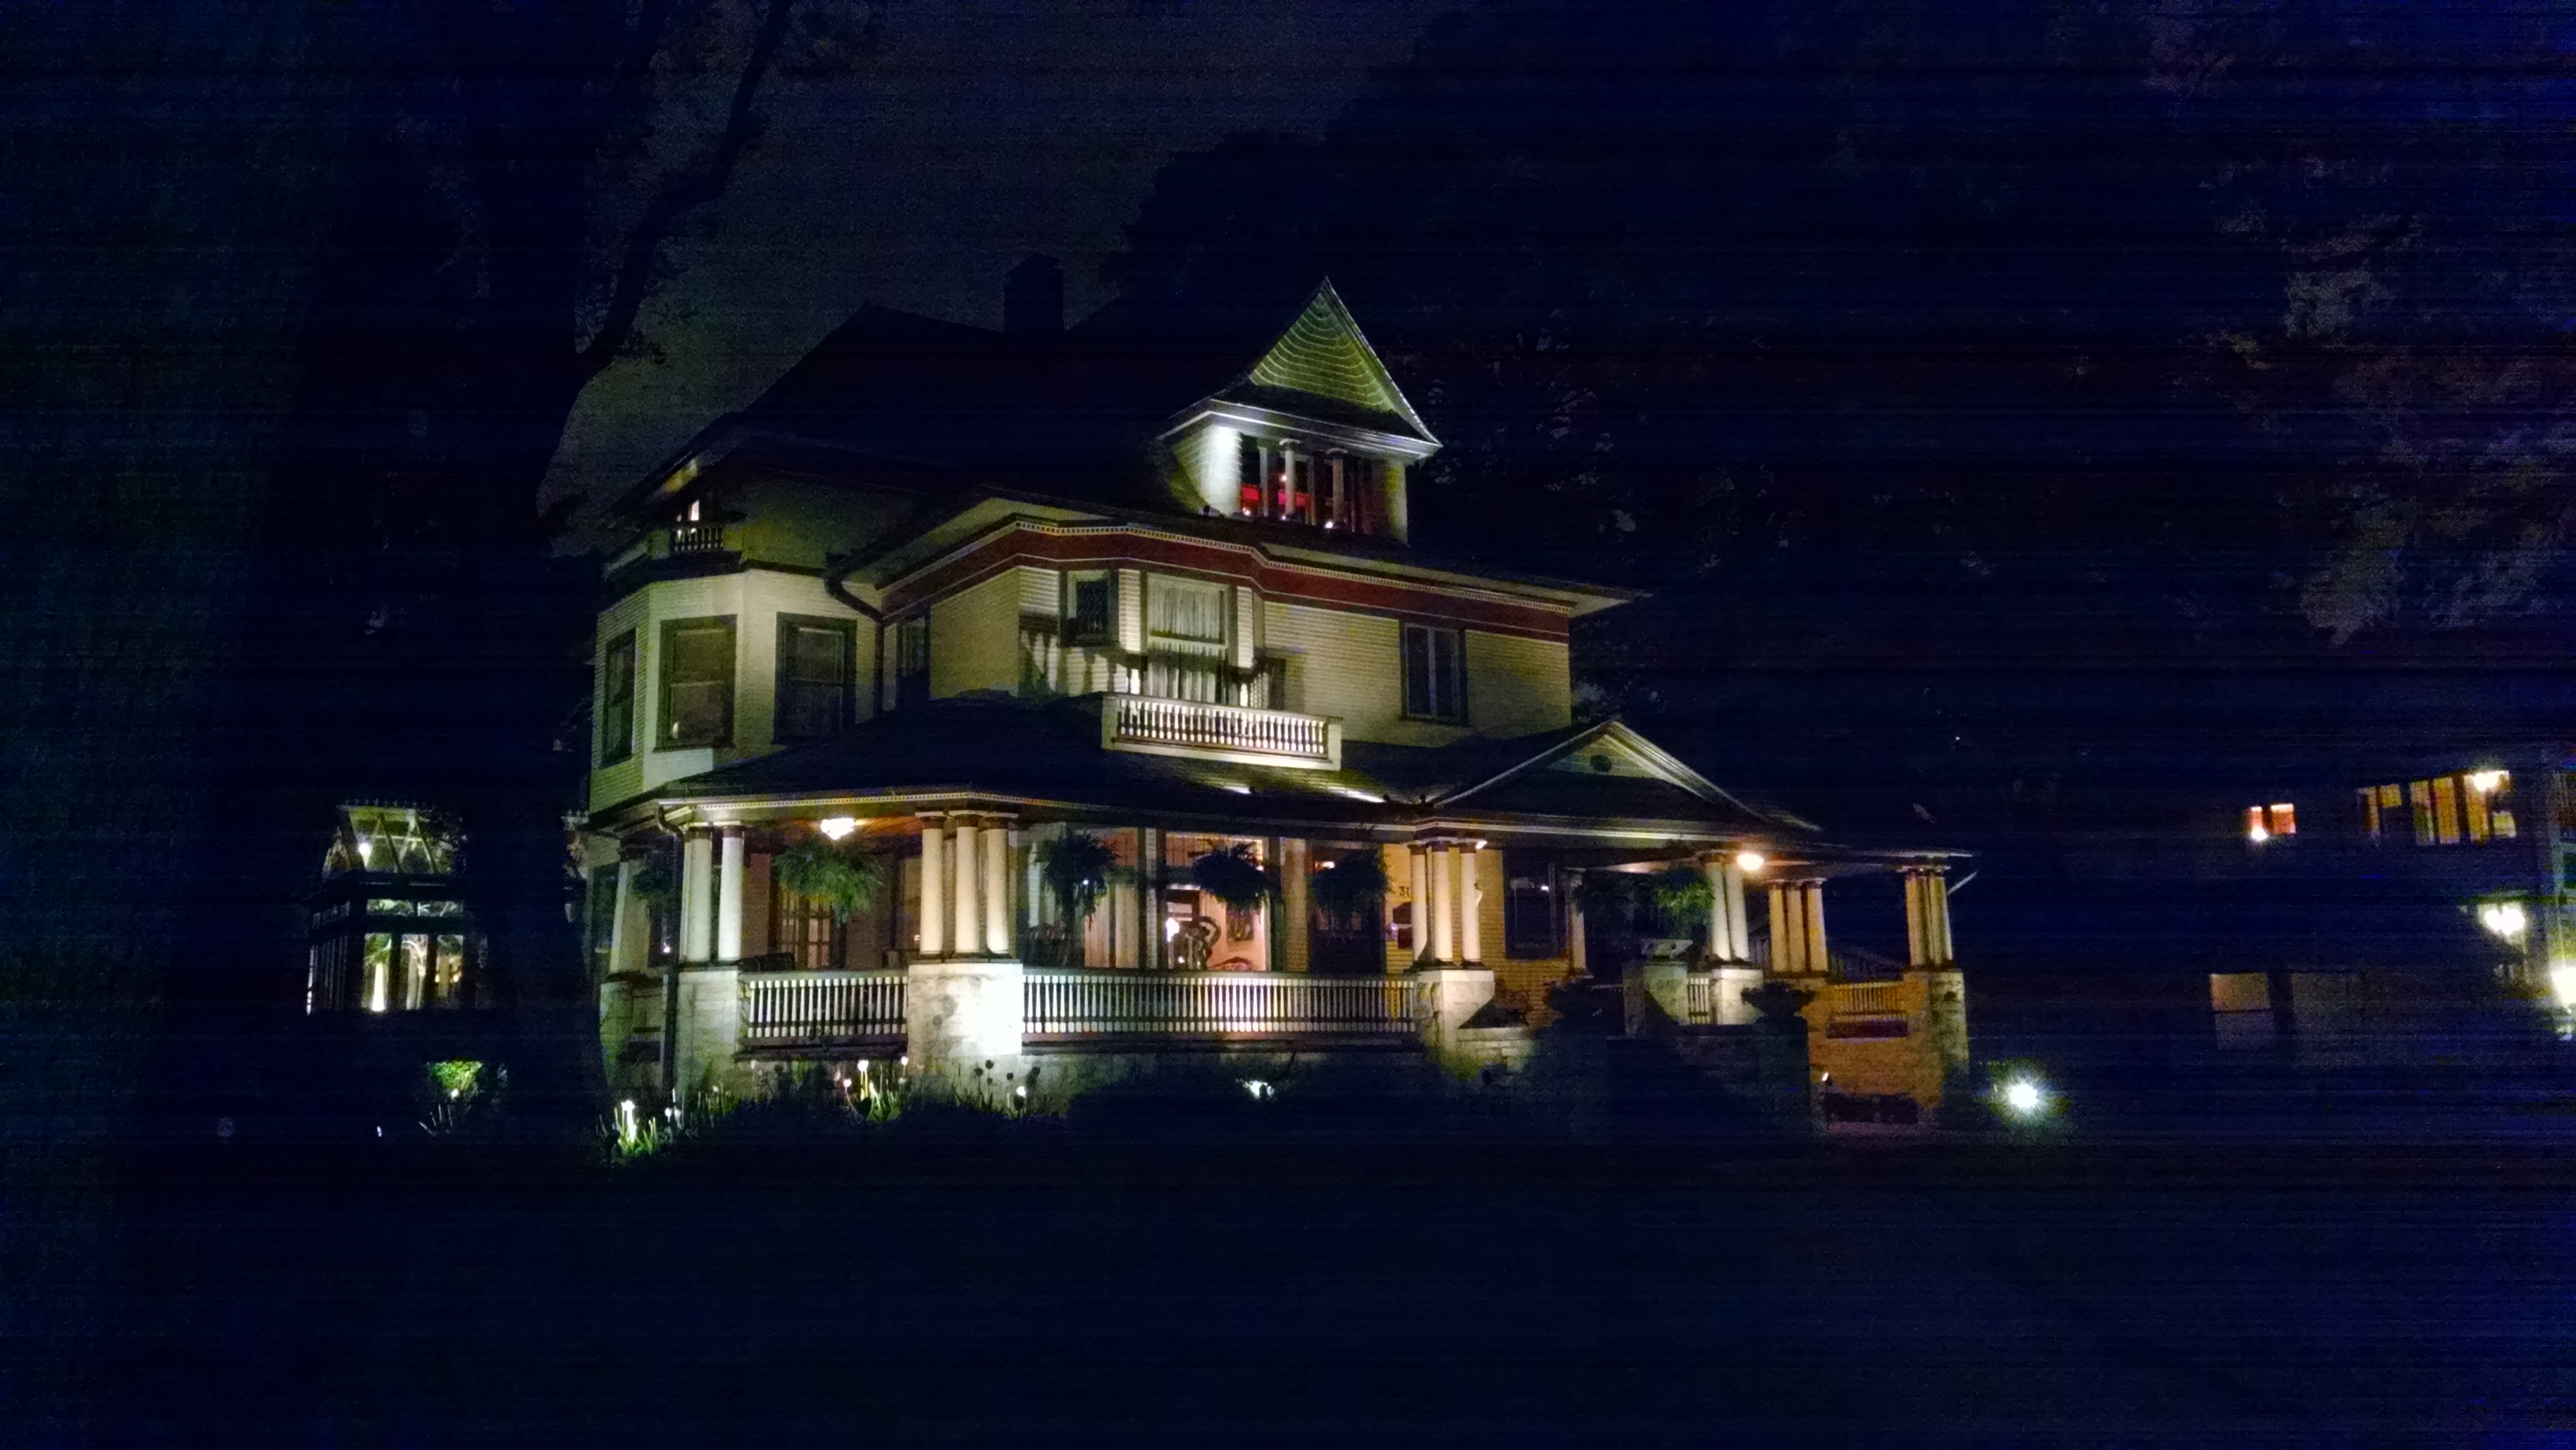 House at night photo